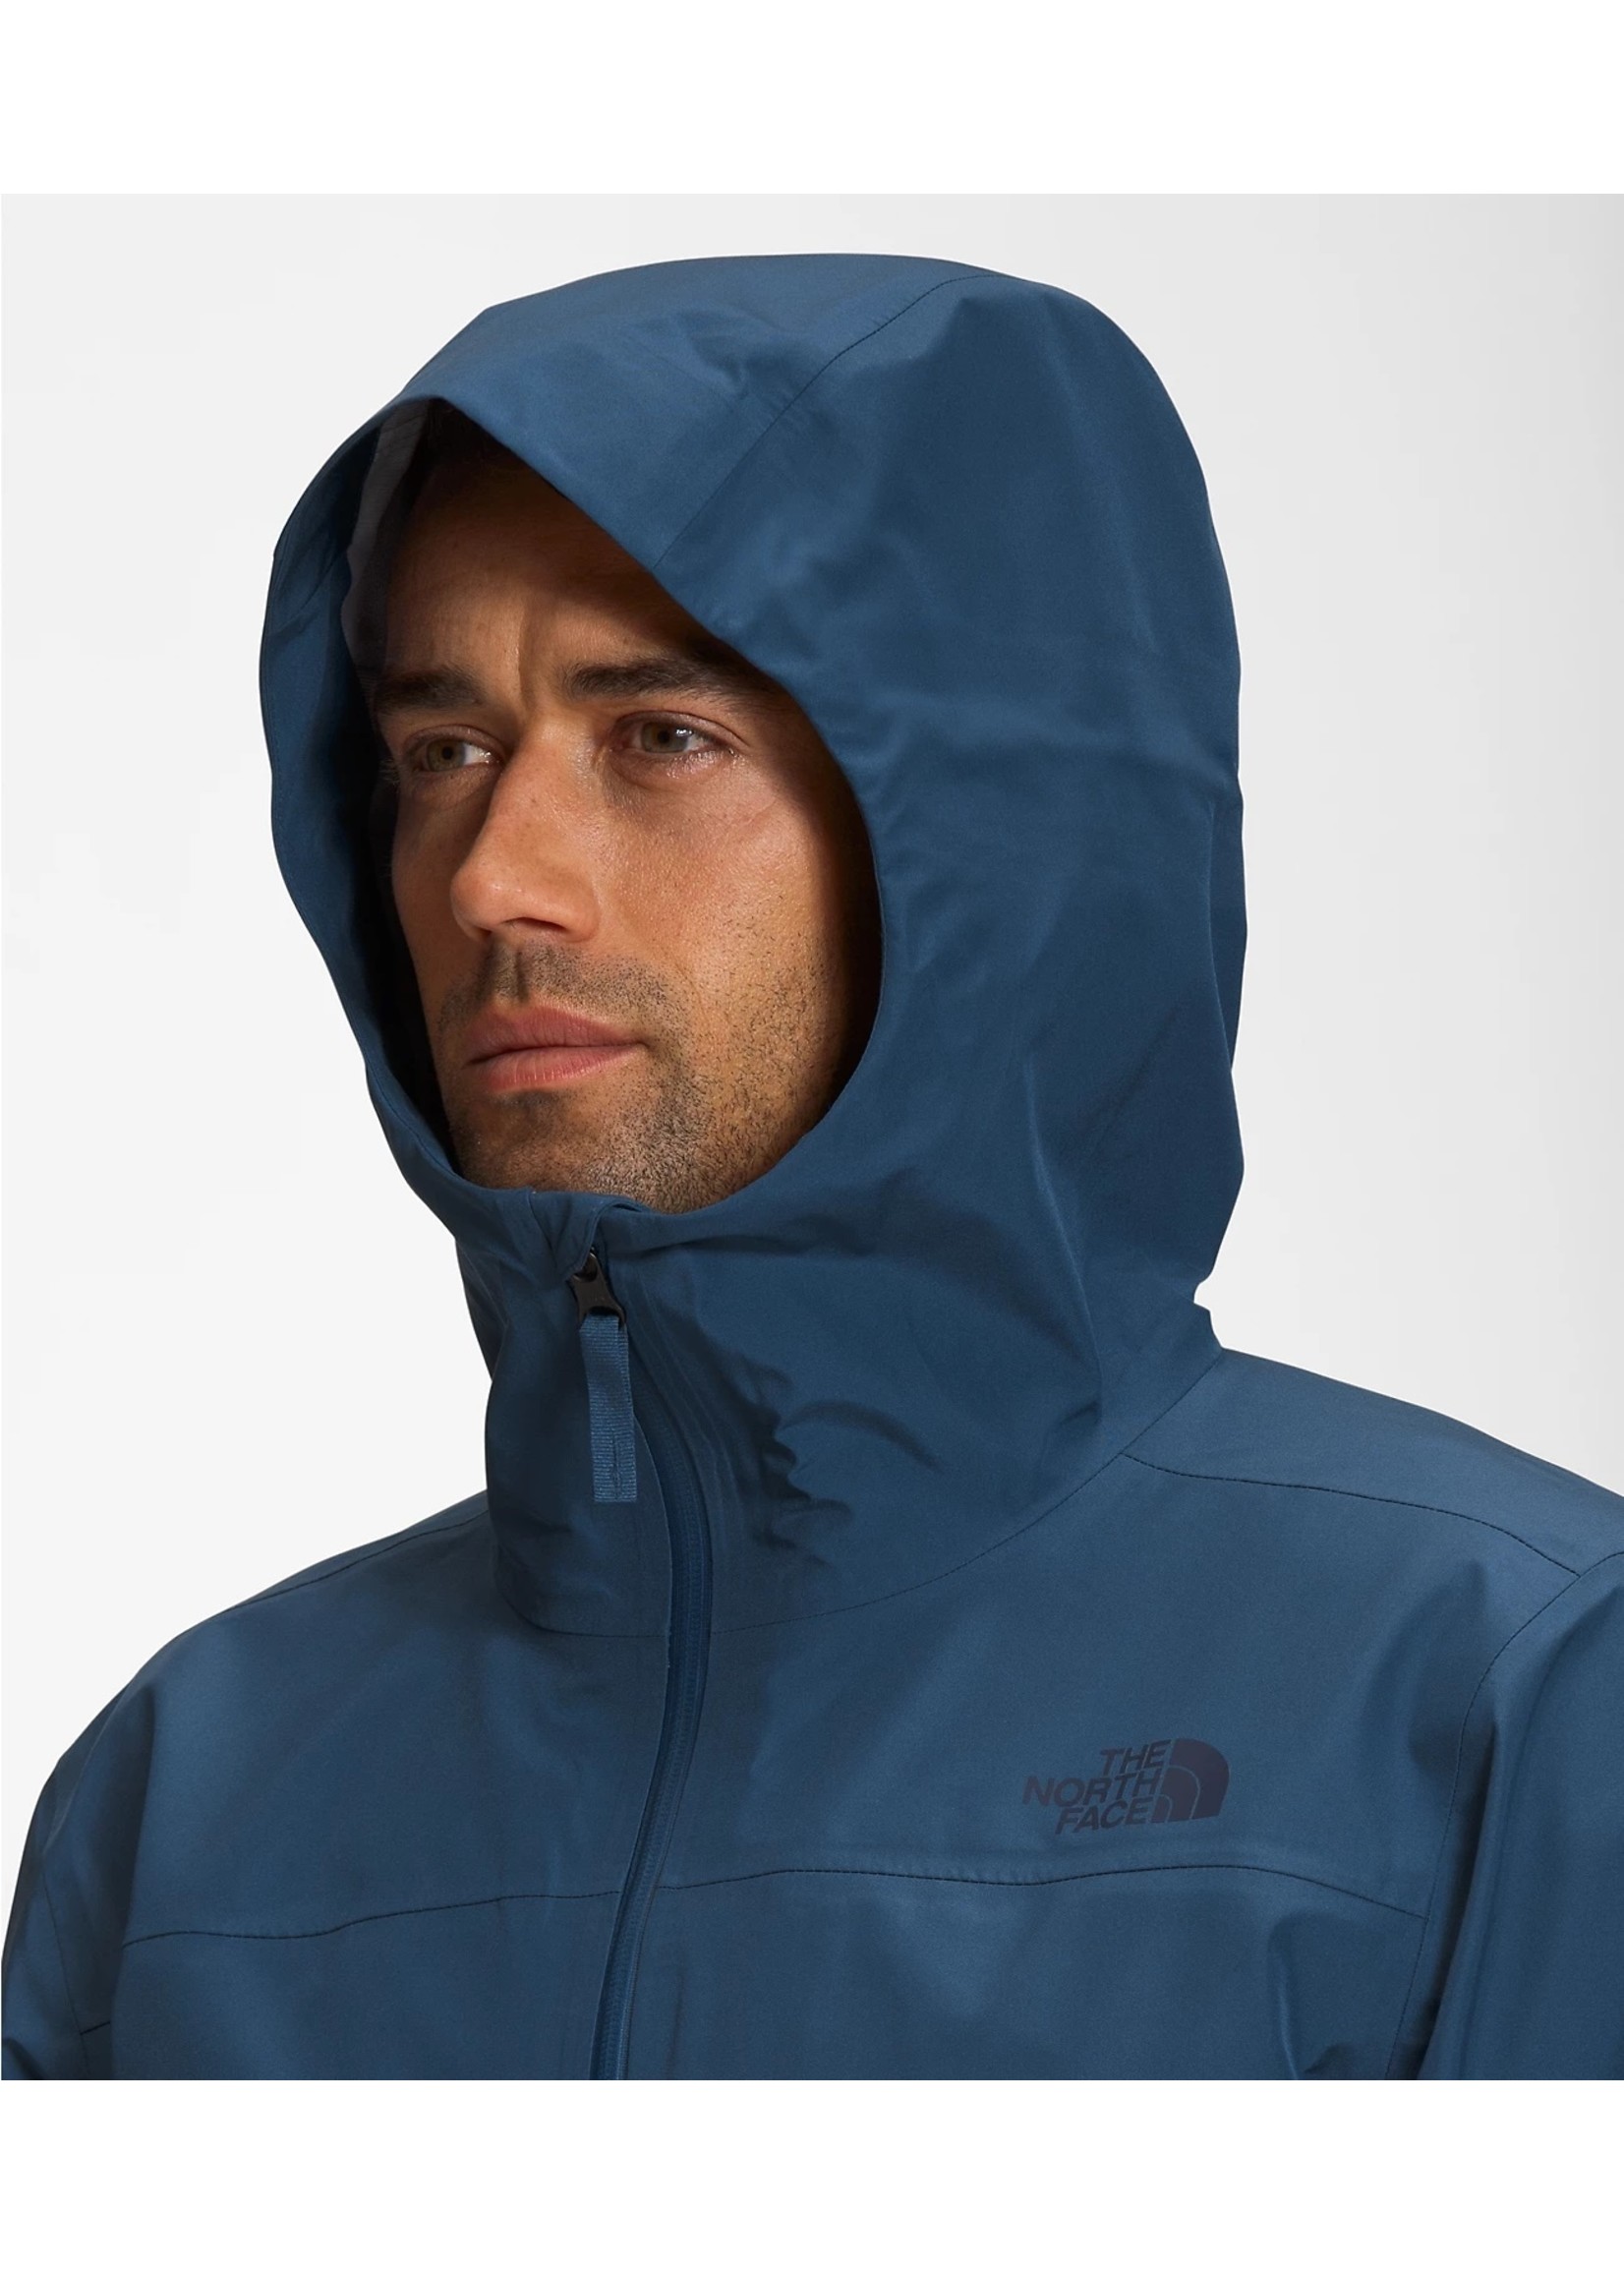 The North Face Mens Dryzzle Futurelight Jacket Shady Blue